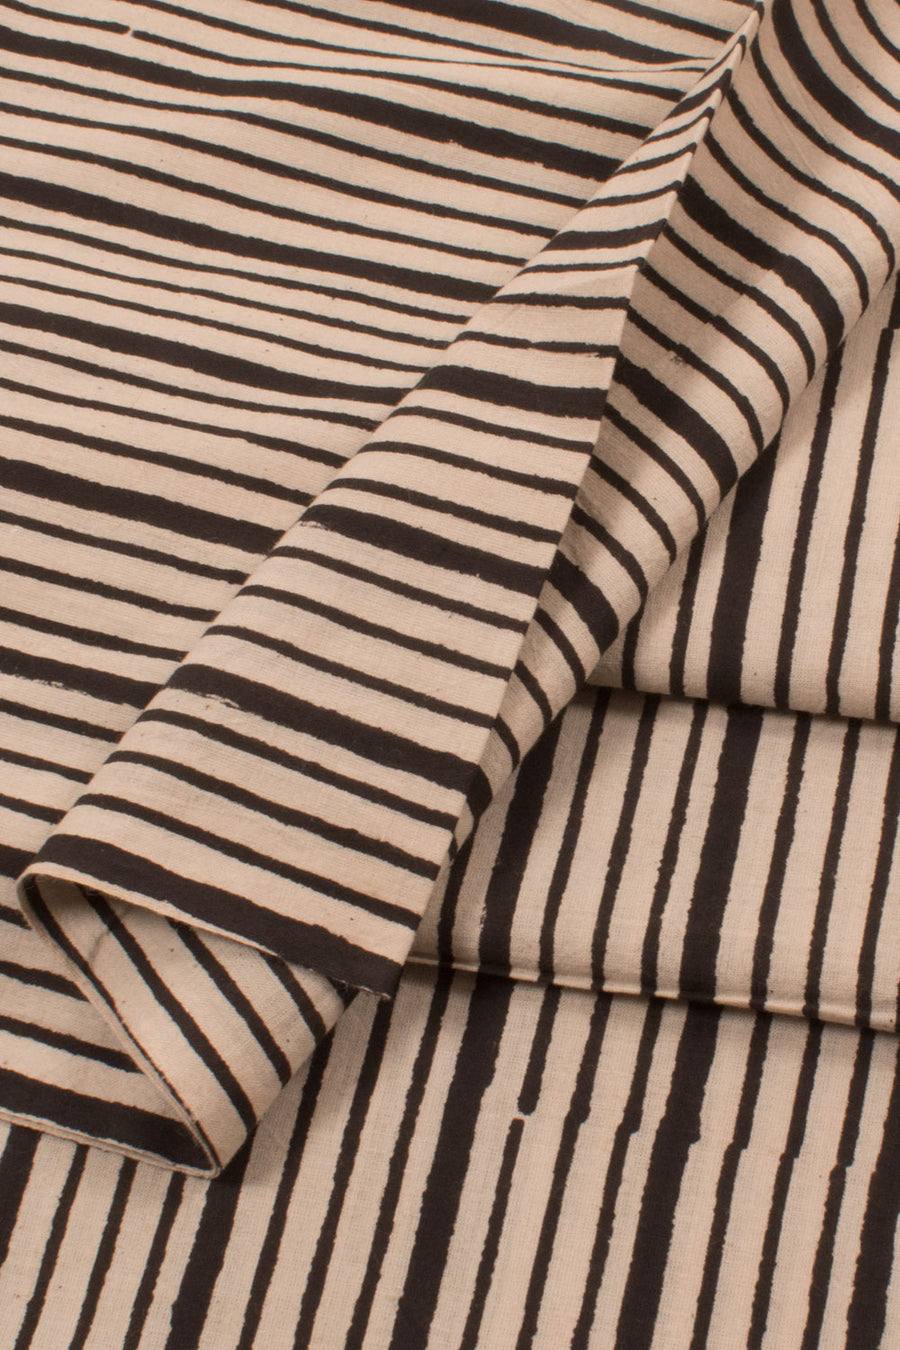 Hand Block Printed 2.5 m Cotton Kurta Material with Stripes Design